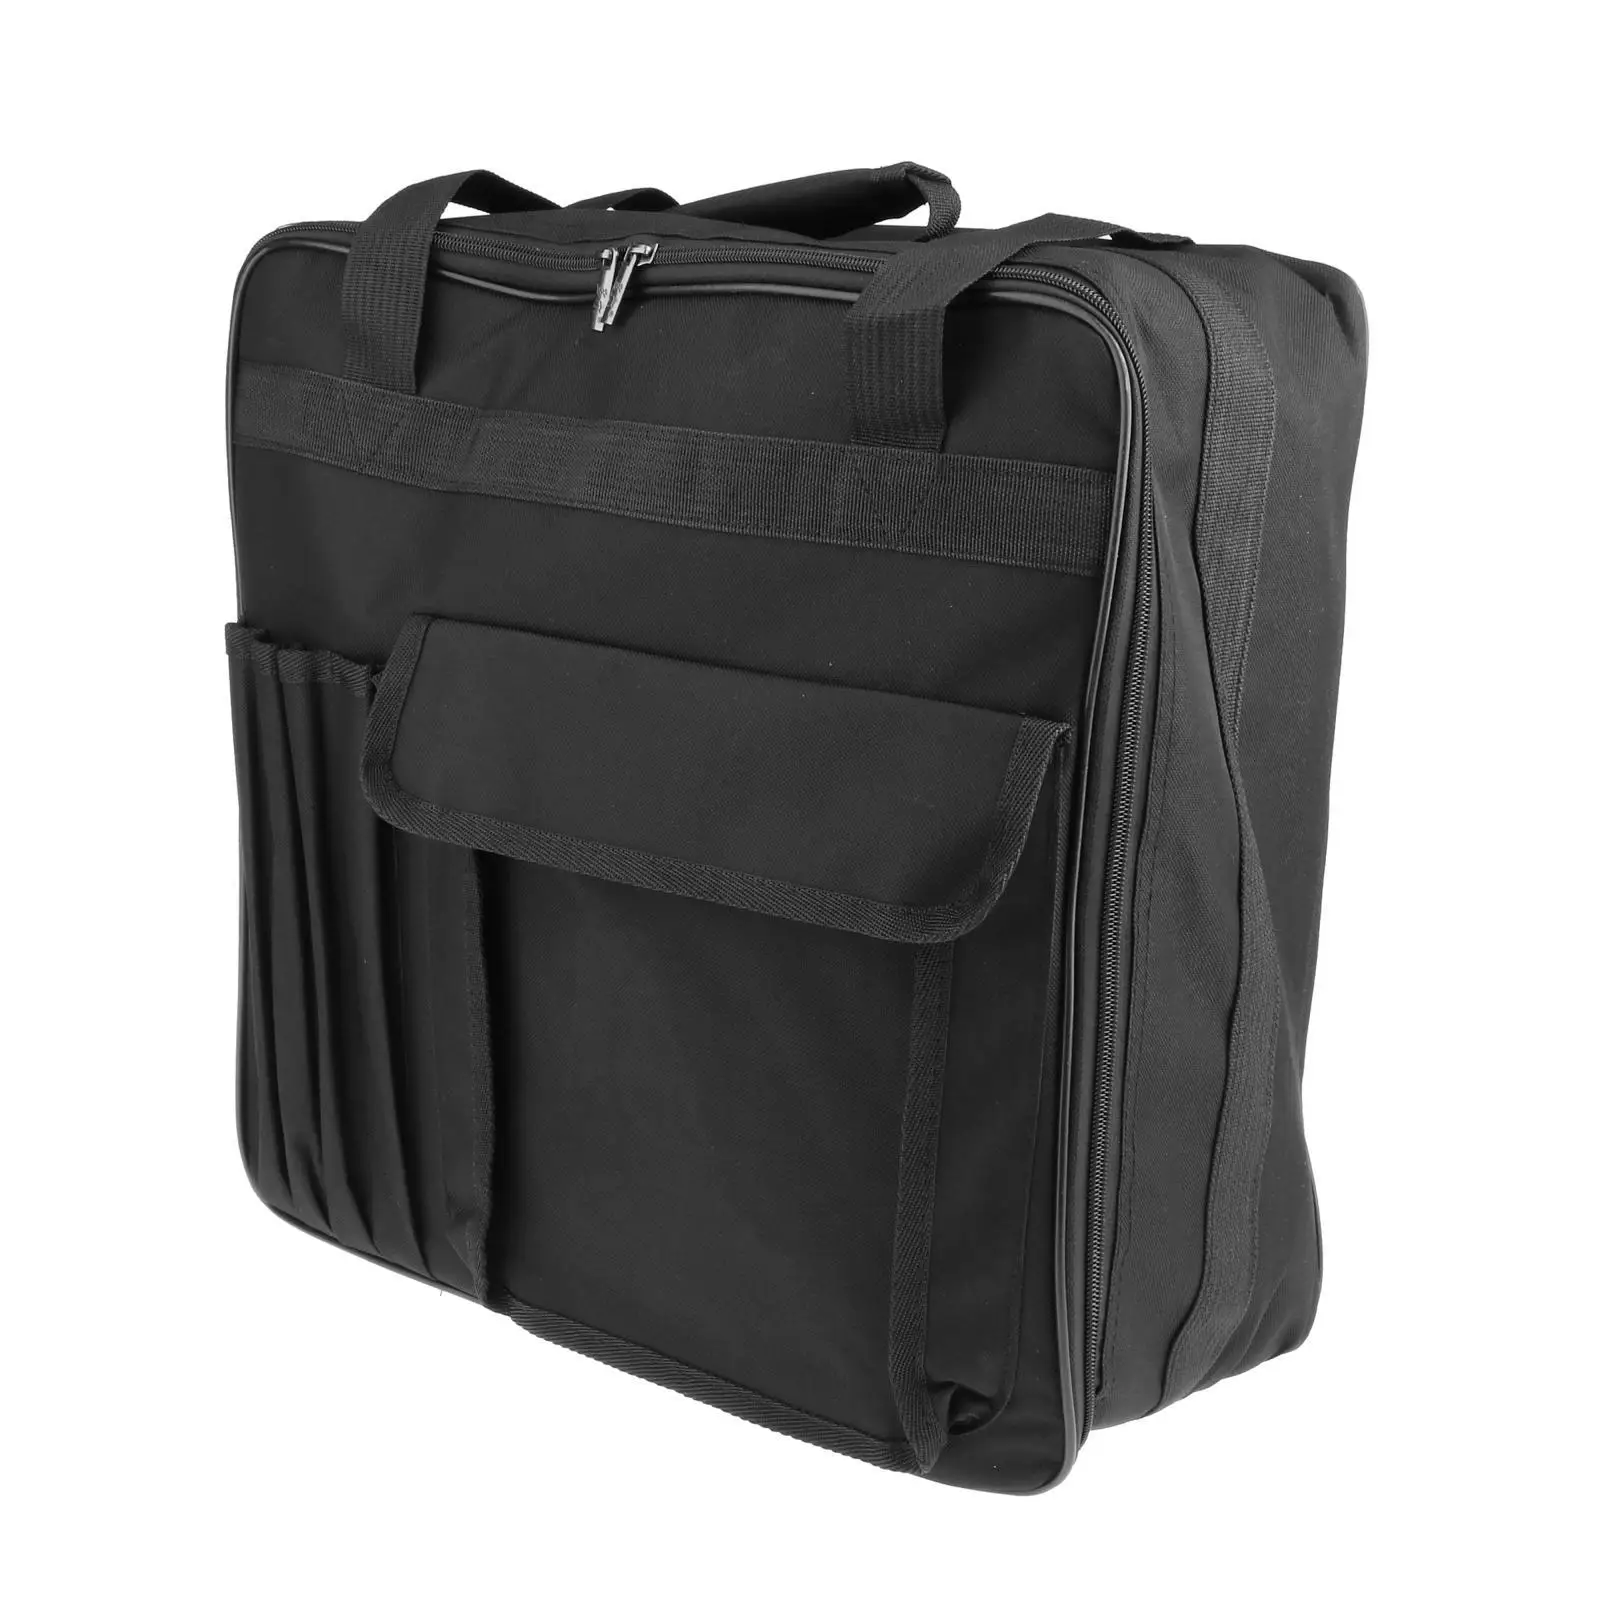 Wateproof Oxford Cloth Snare Drum Storage Bag Backpack Case with Shoulder Straps